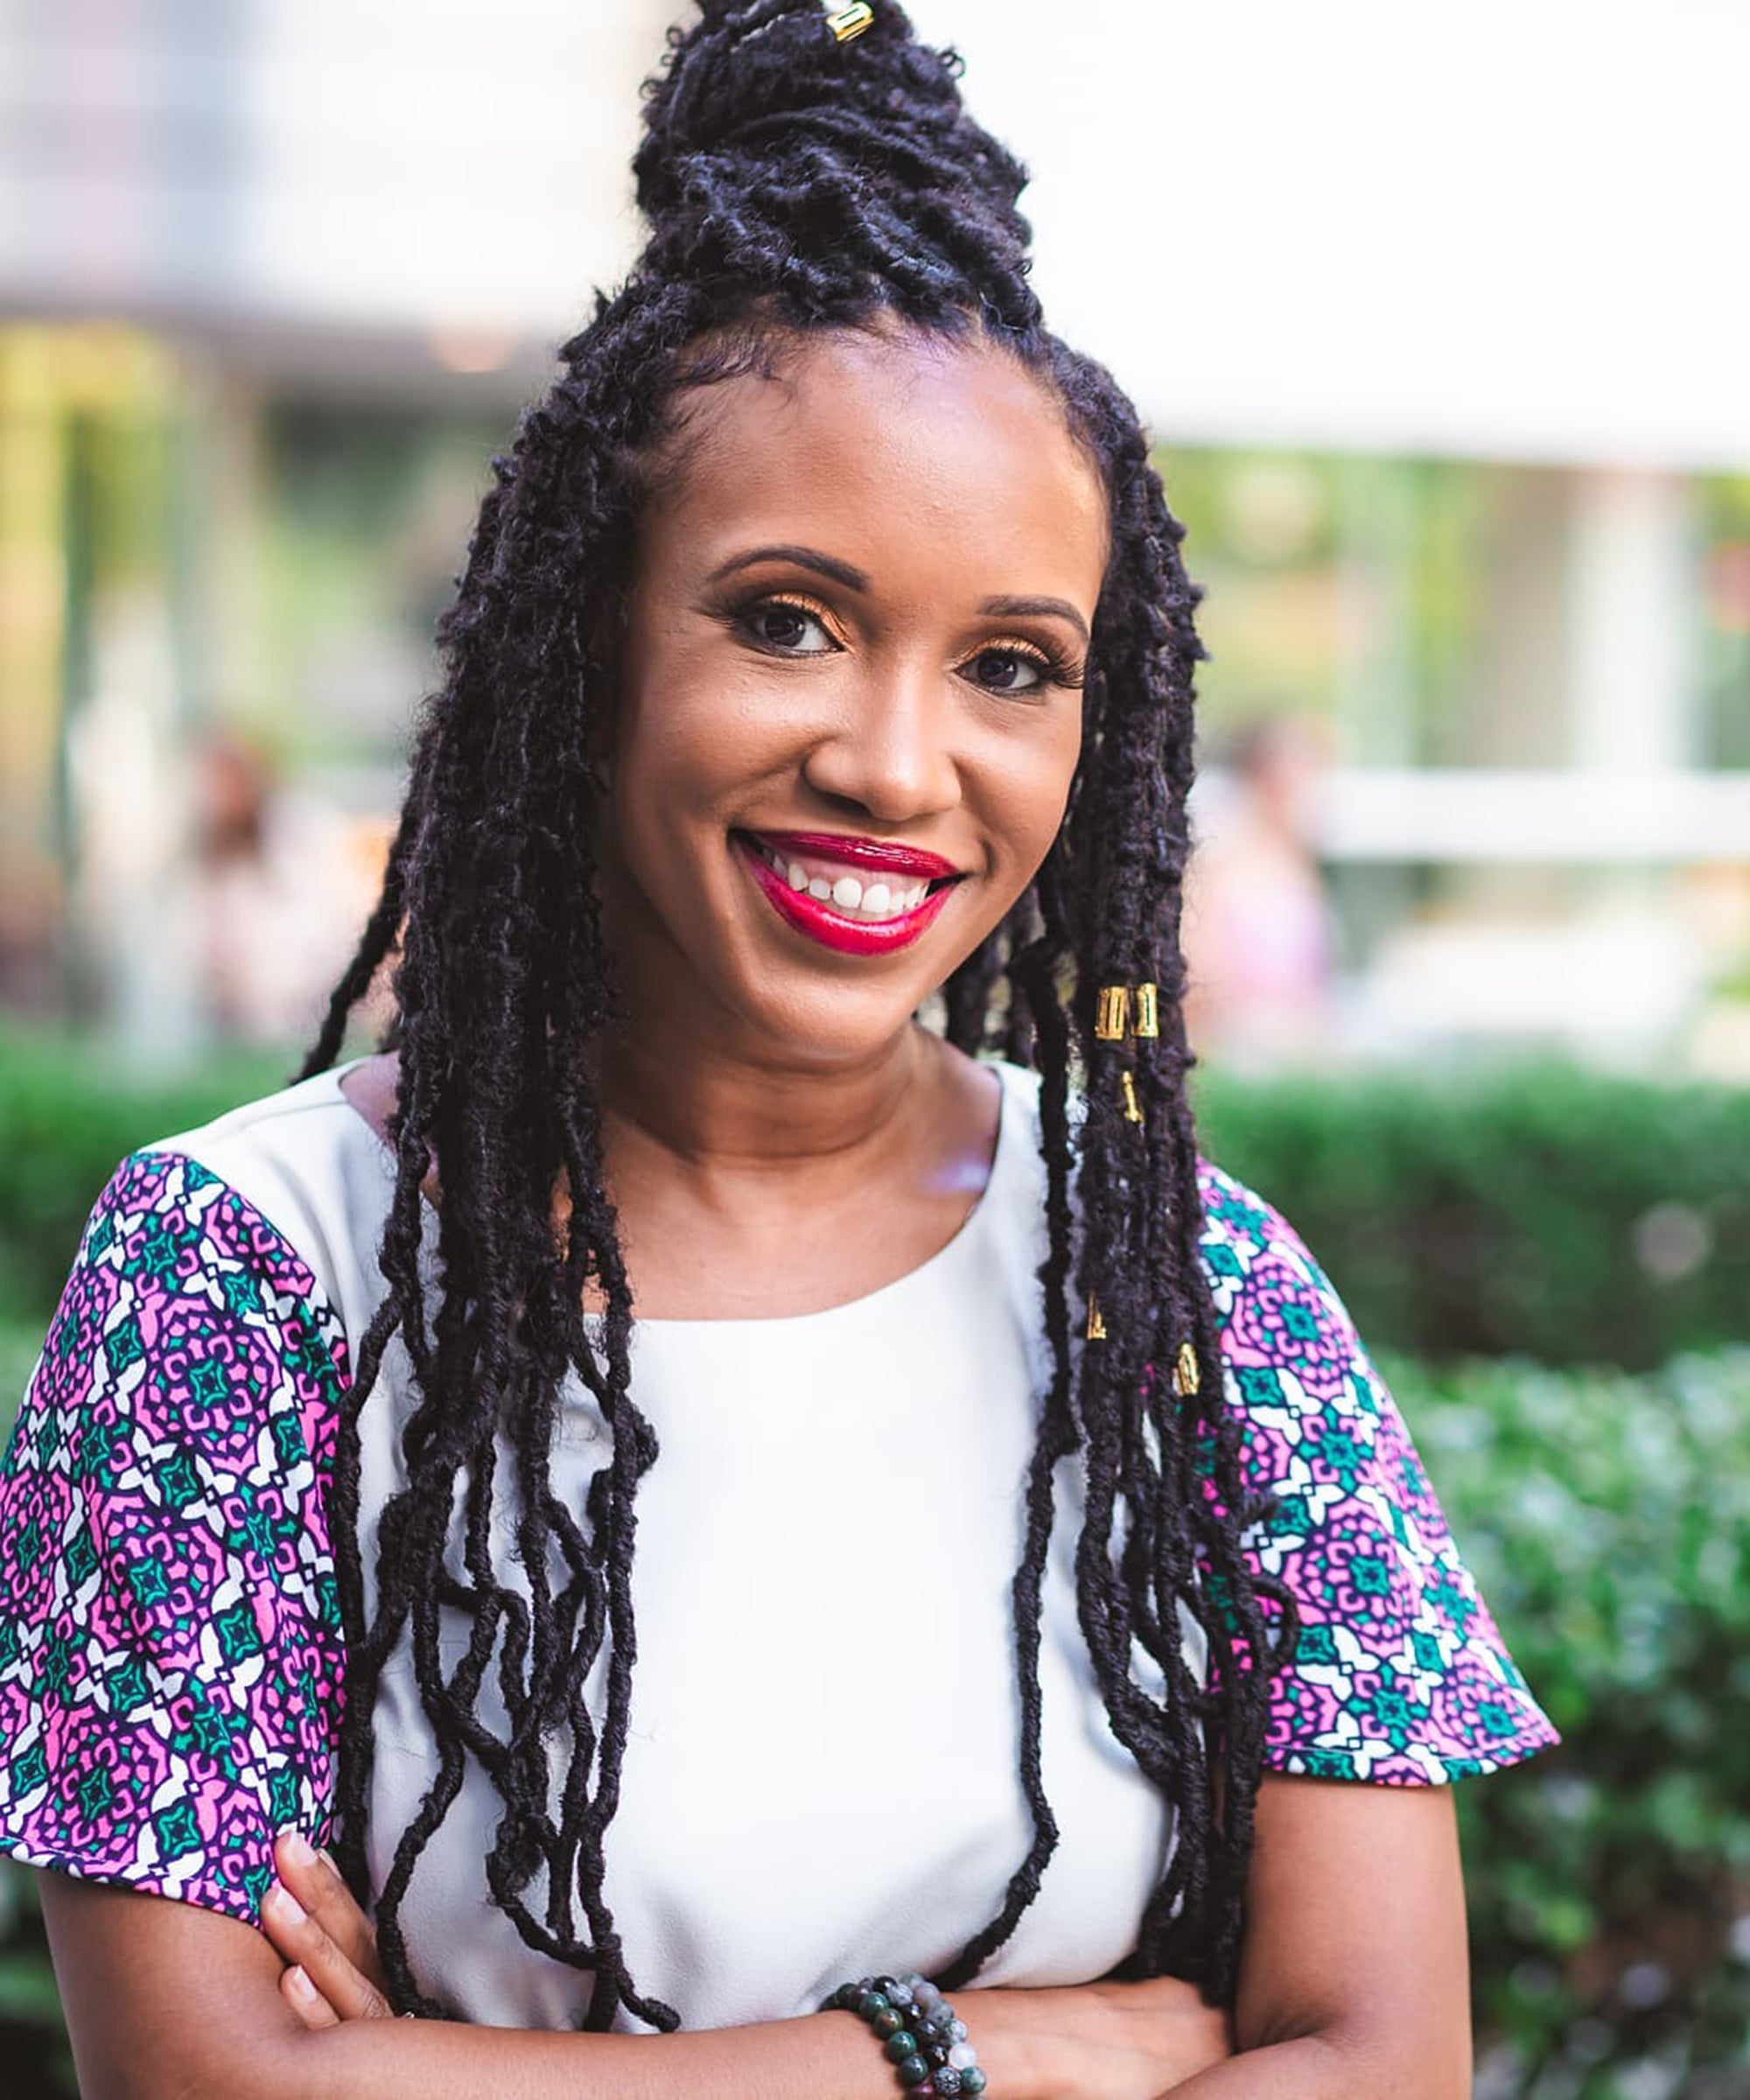 Empowering Photos of Beautiful Black Women Embracing Their Bodies